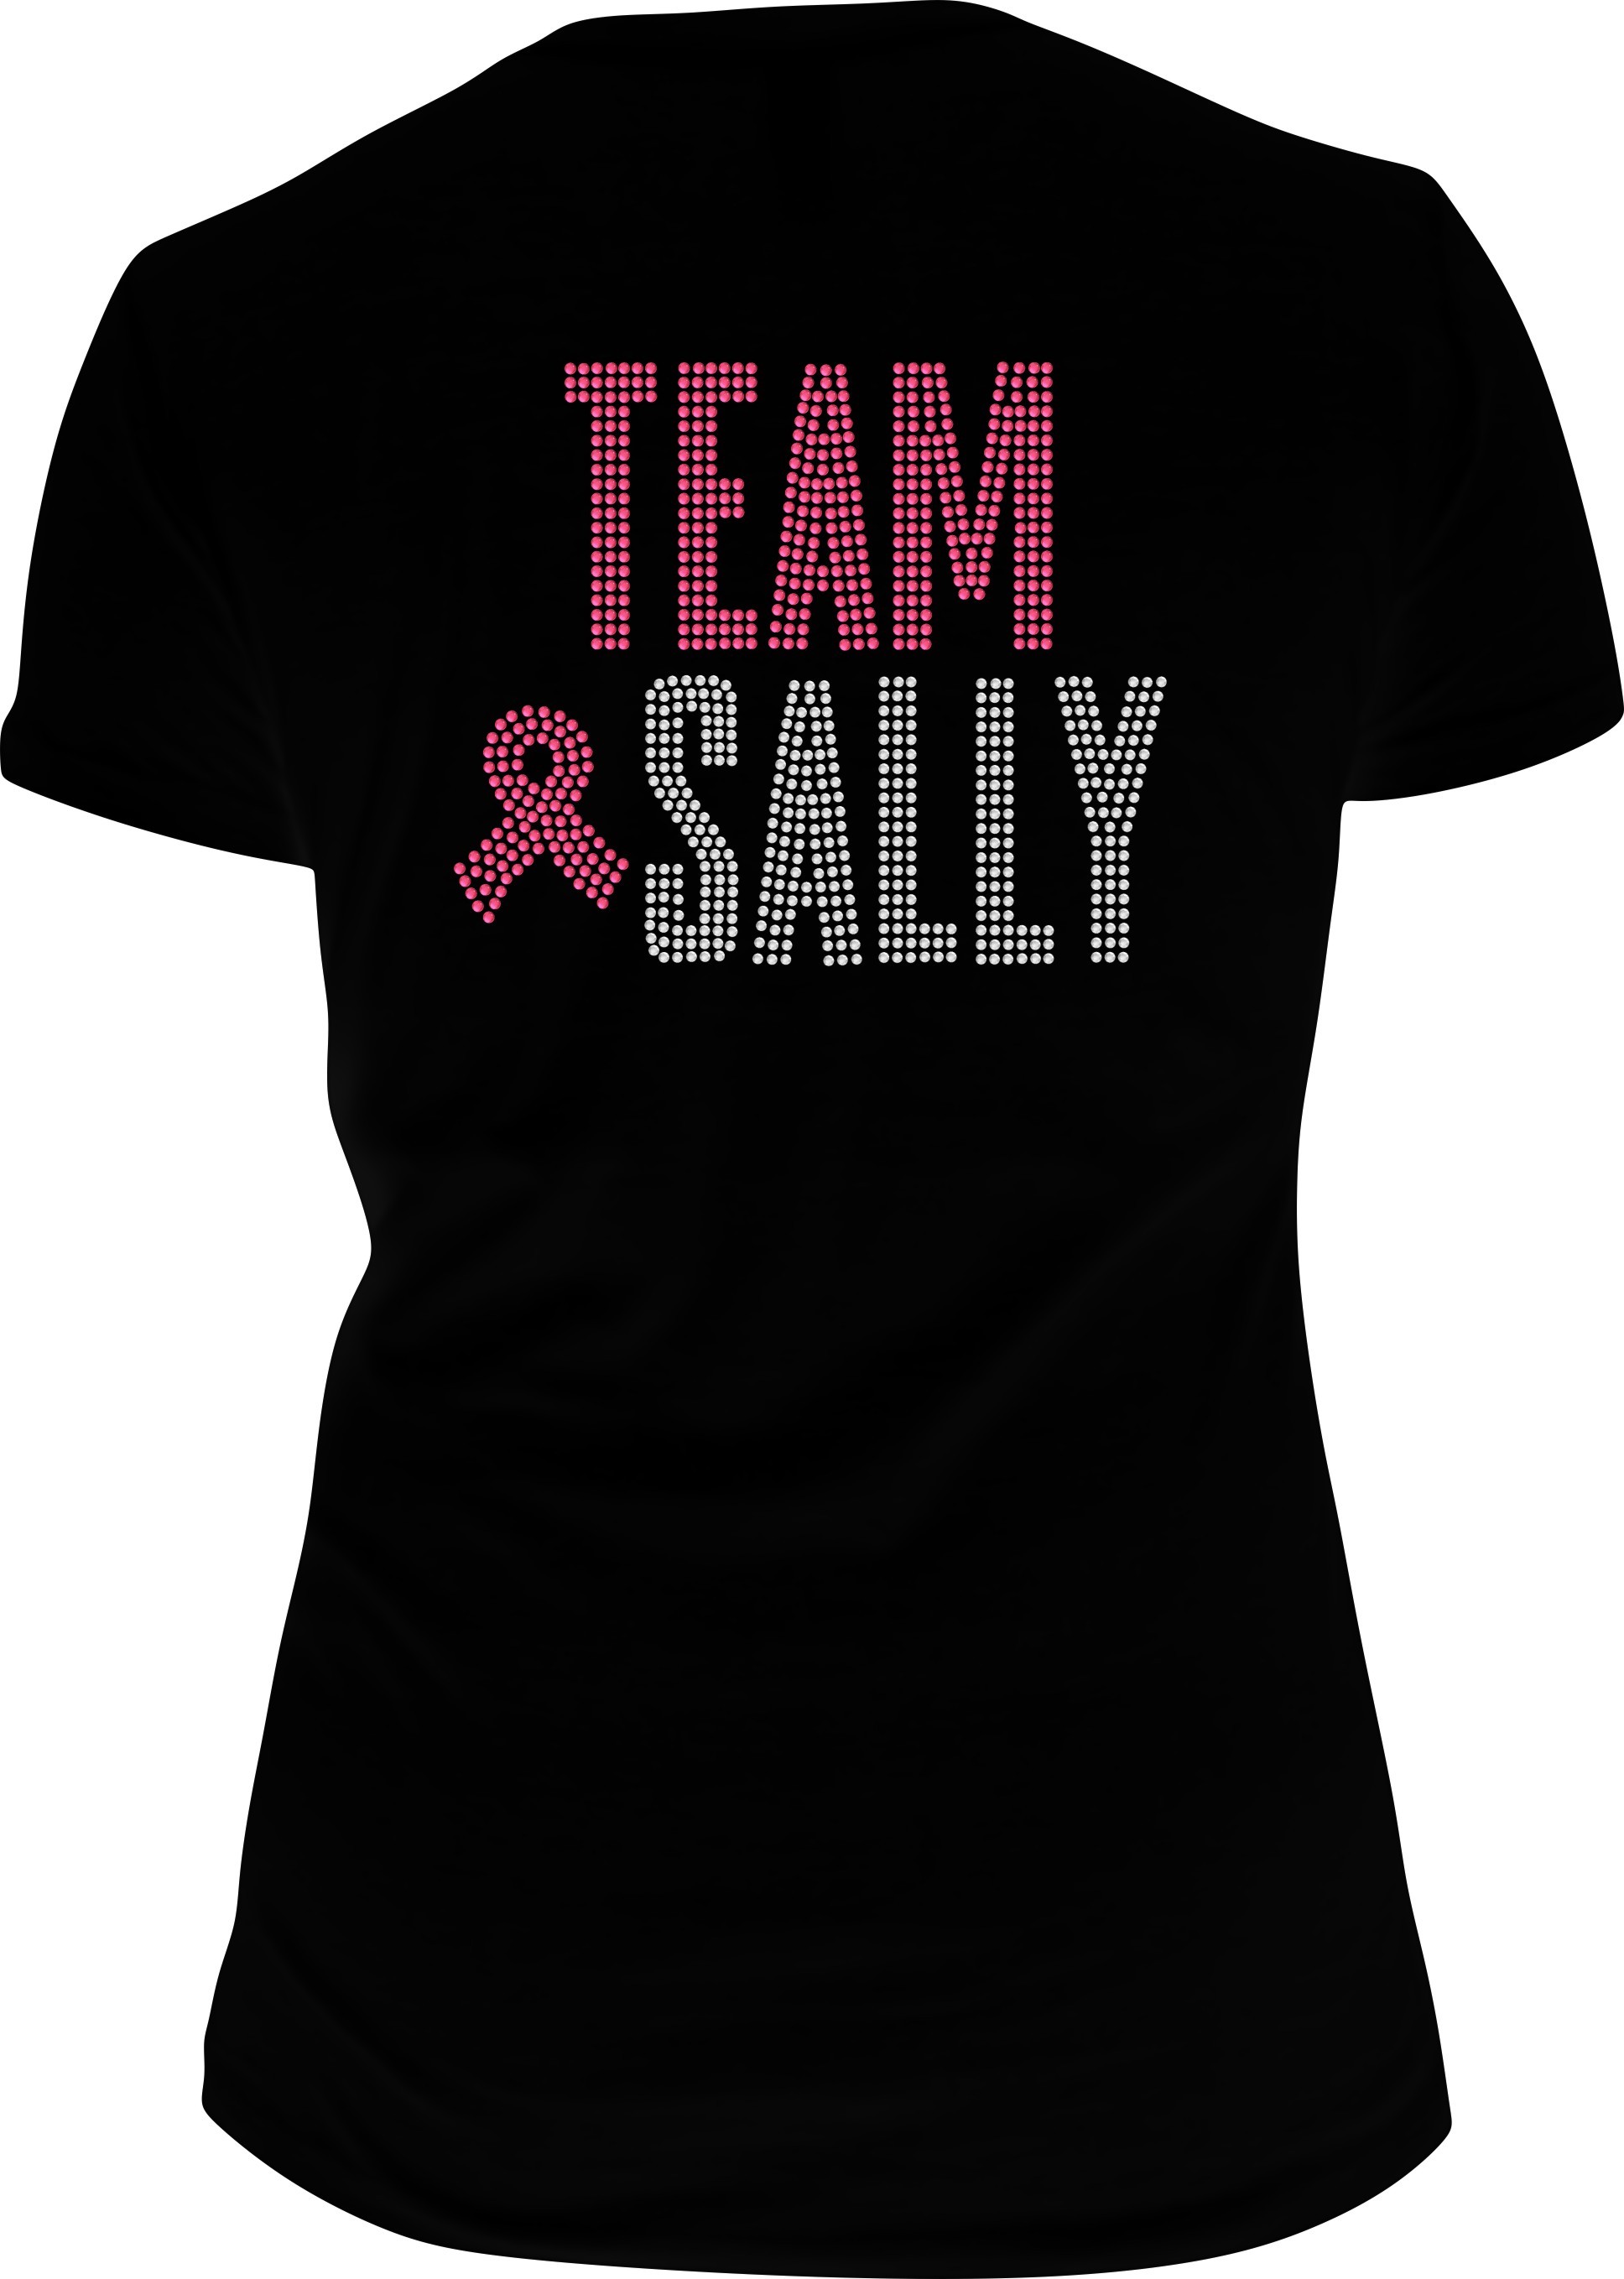 12 Team Sally Tough Girls Fight Strong